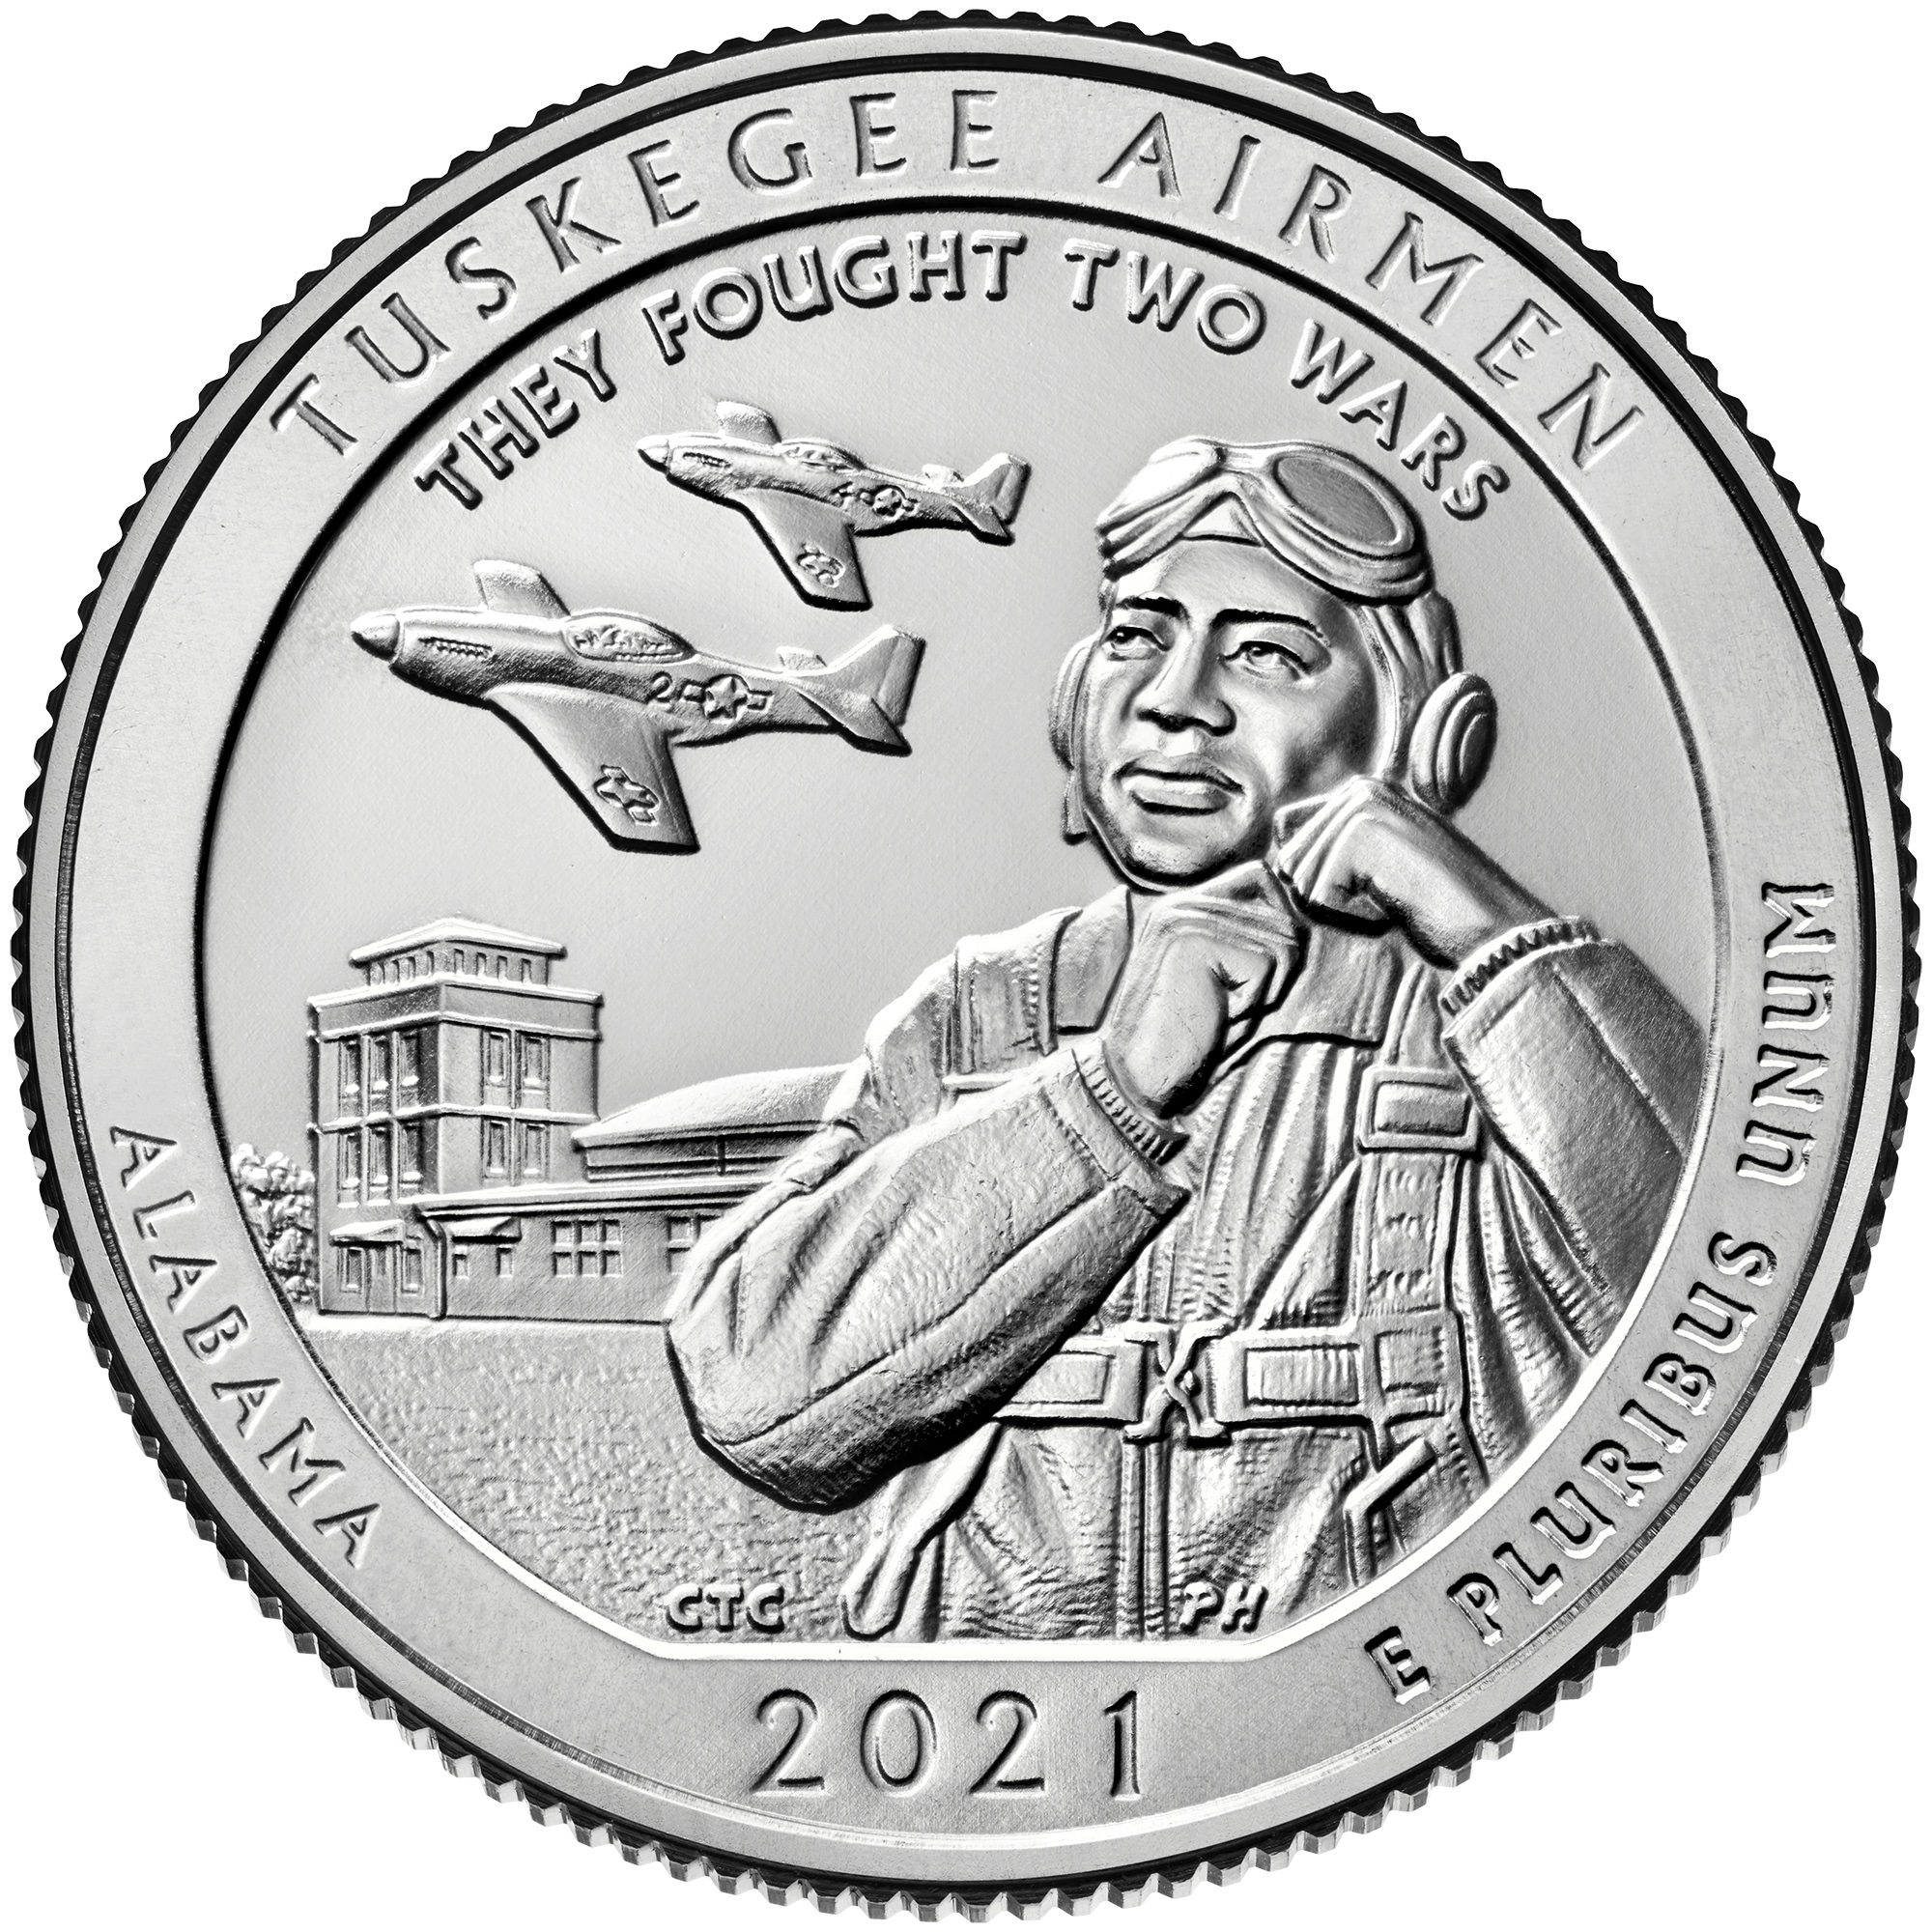 2021 Tuskegee Airman quarter